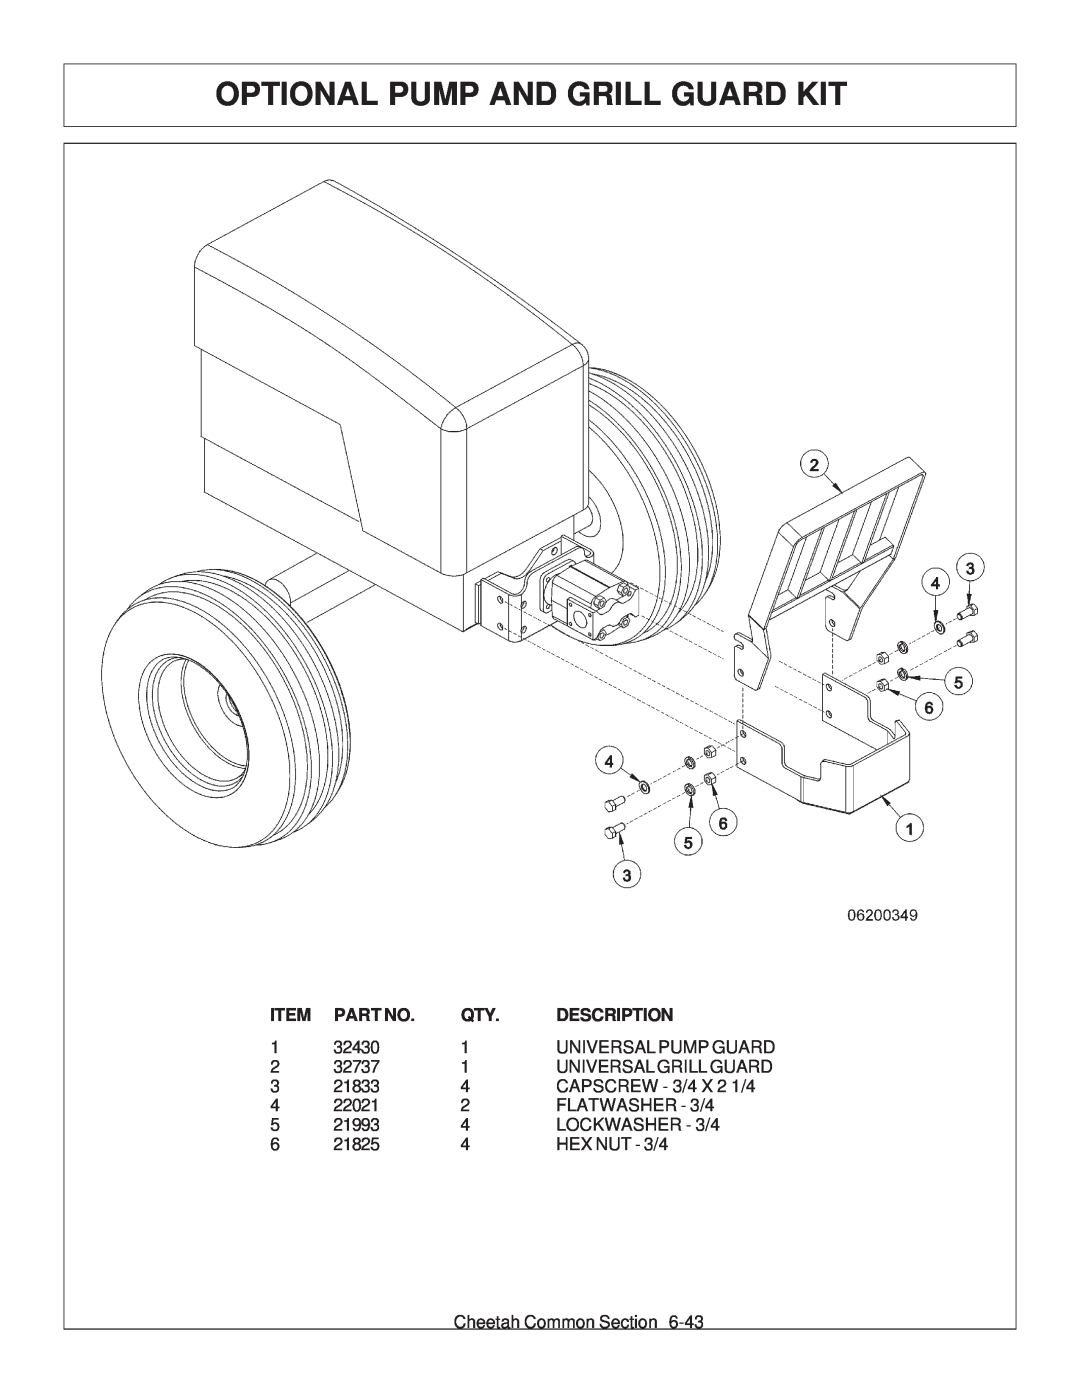 Tiger Products Co., Ltd JD 5101E, JD 5083E, JD 5093E manual Optional Pump And Grill Guard Kit, Description 